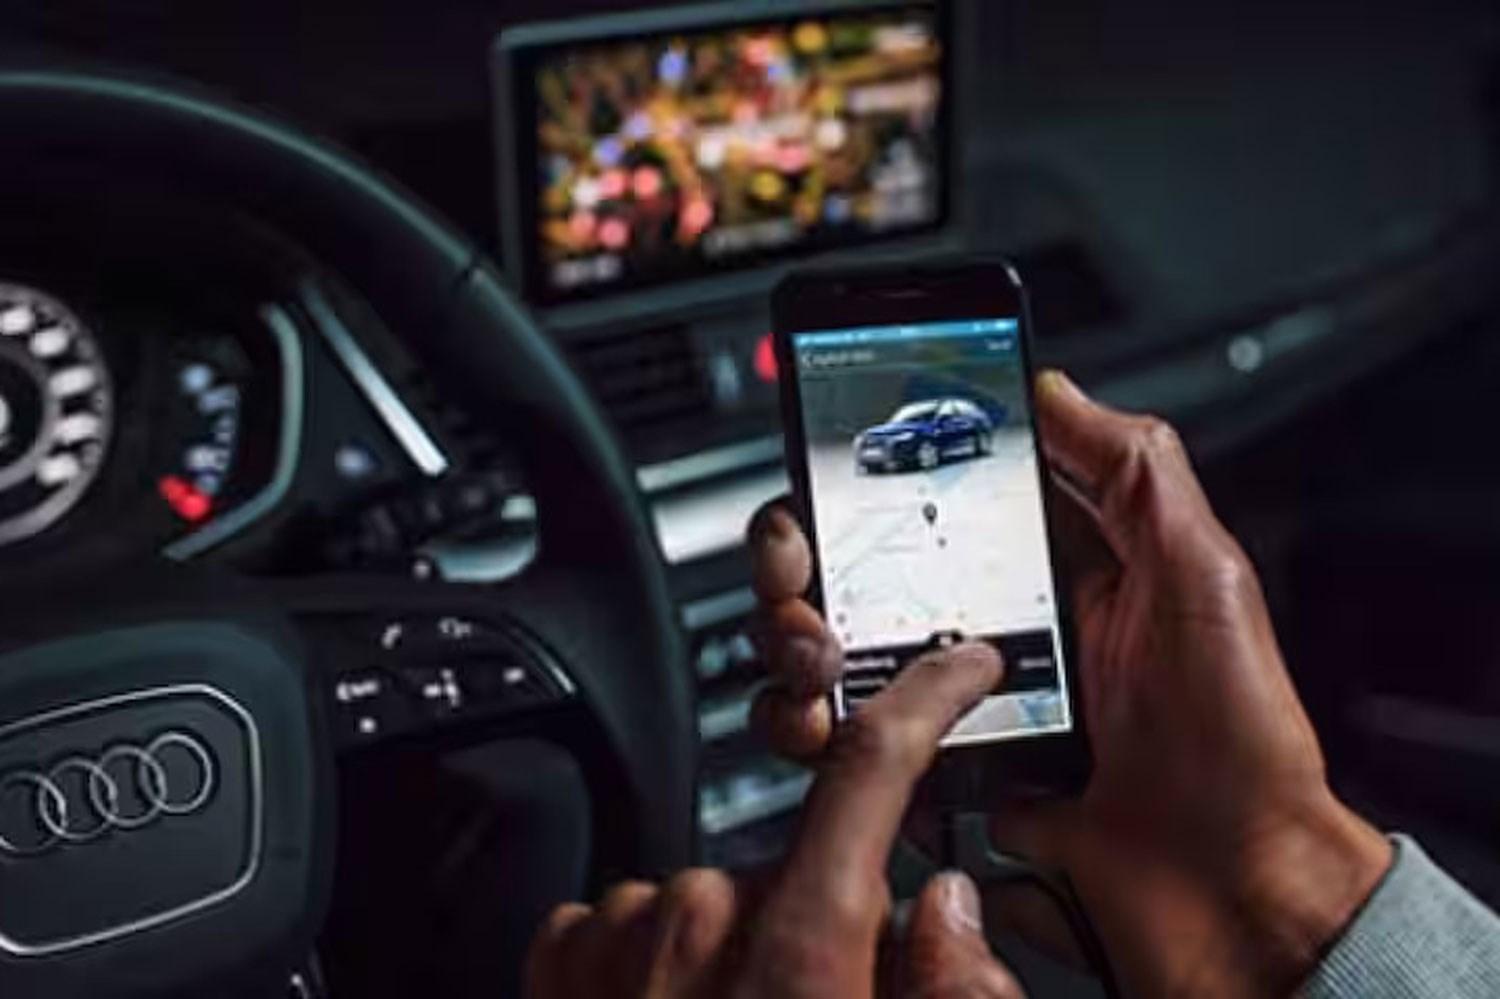 Audi connect infotainment app, image shows Audi driver using the app